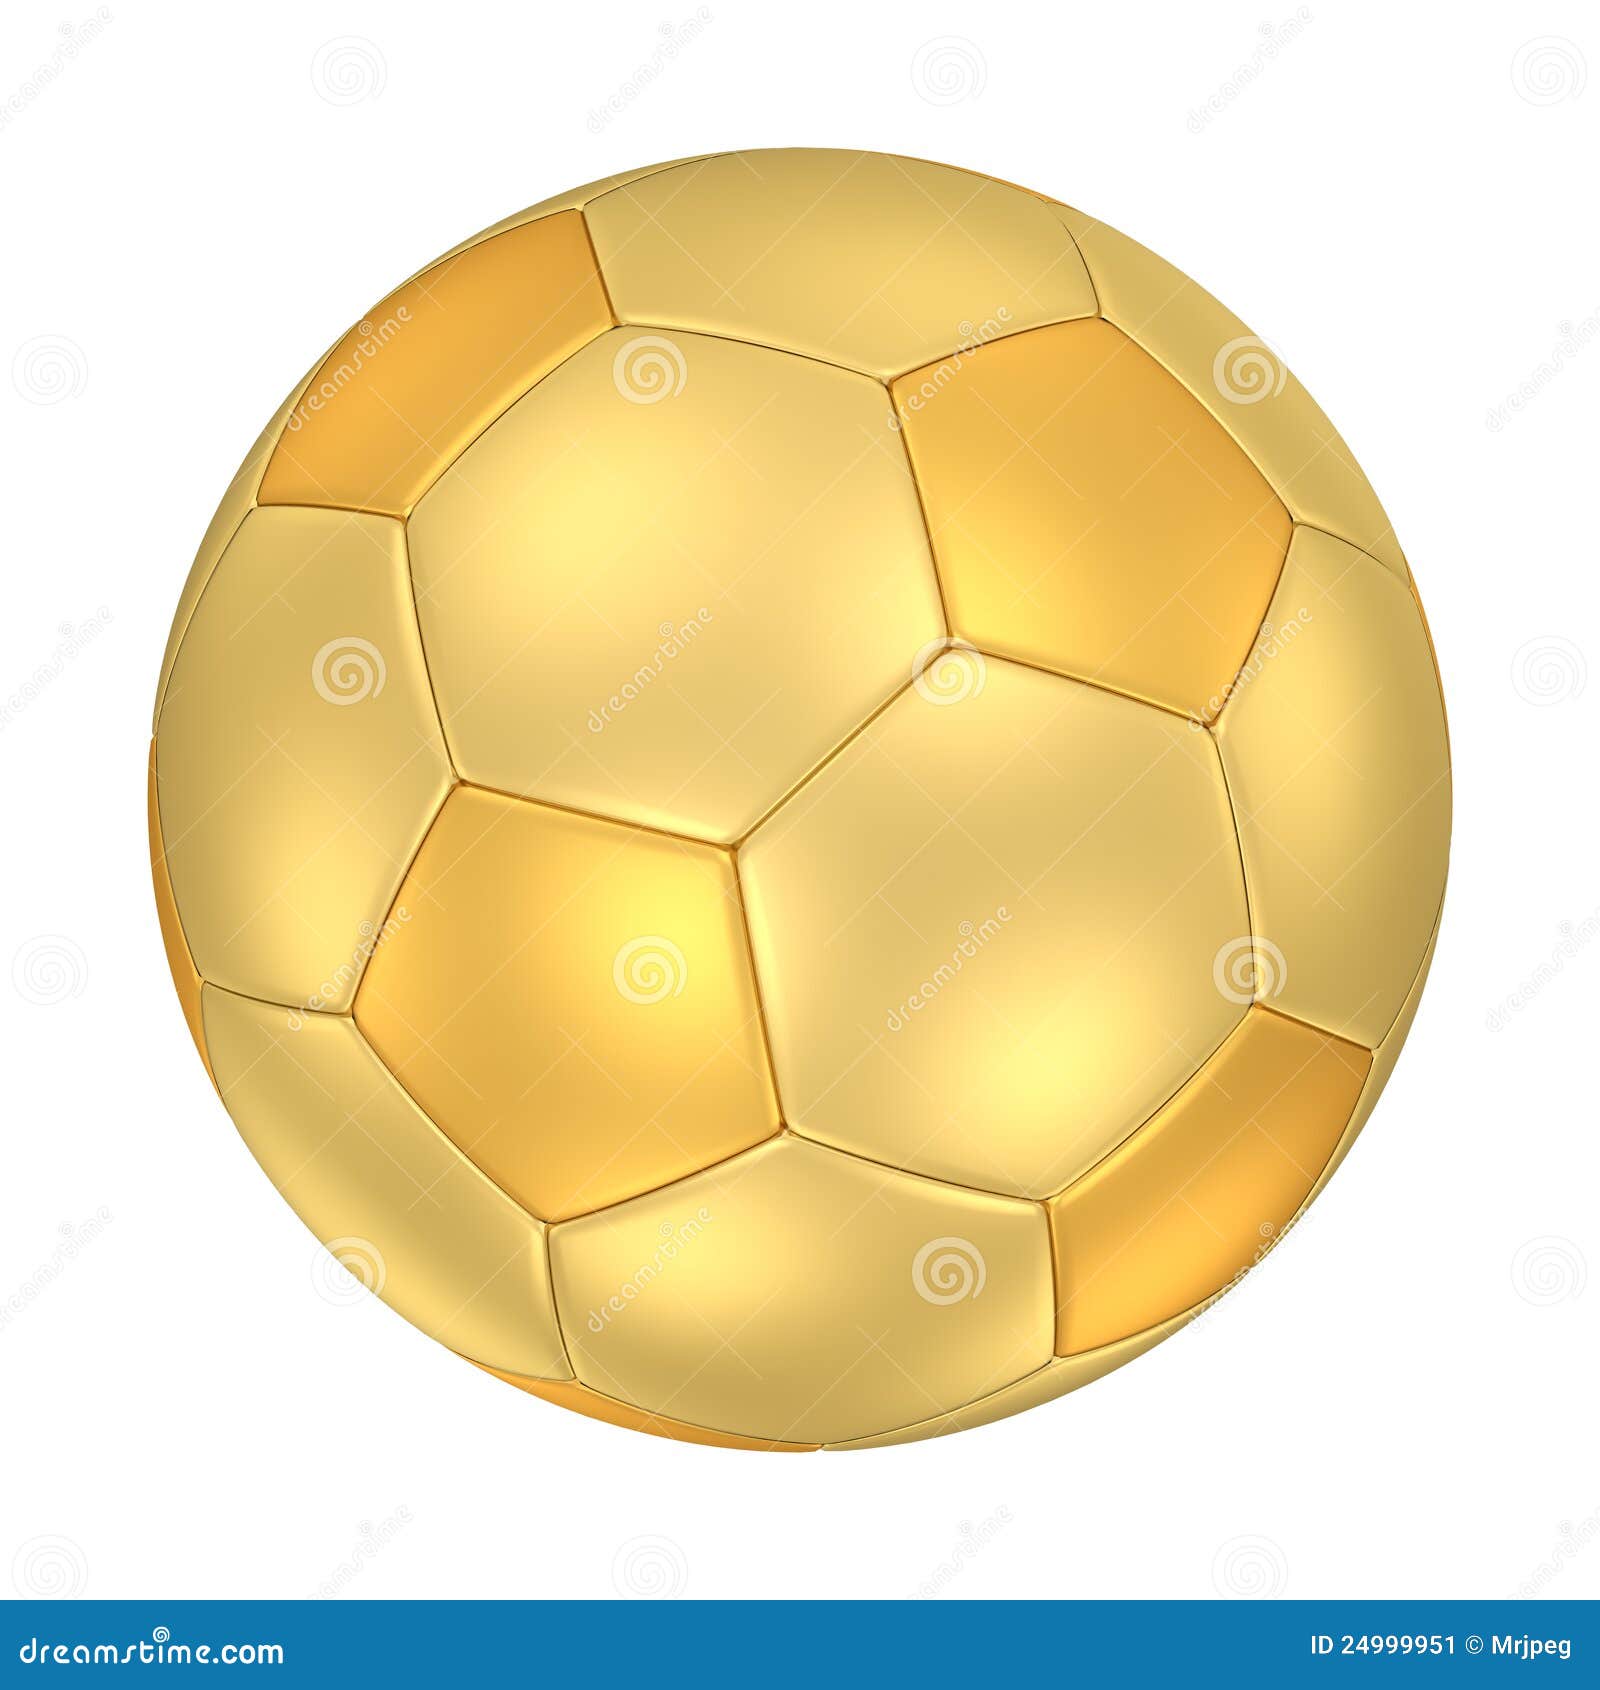 Golden Soccer Ball stock illustration. Illustration of generated - 24999951